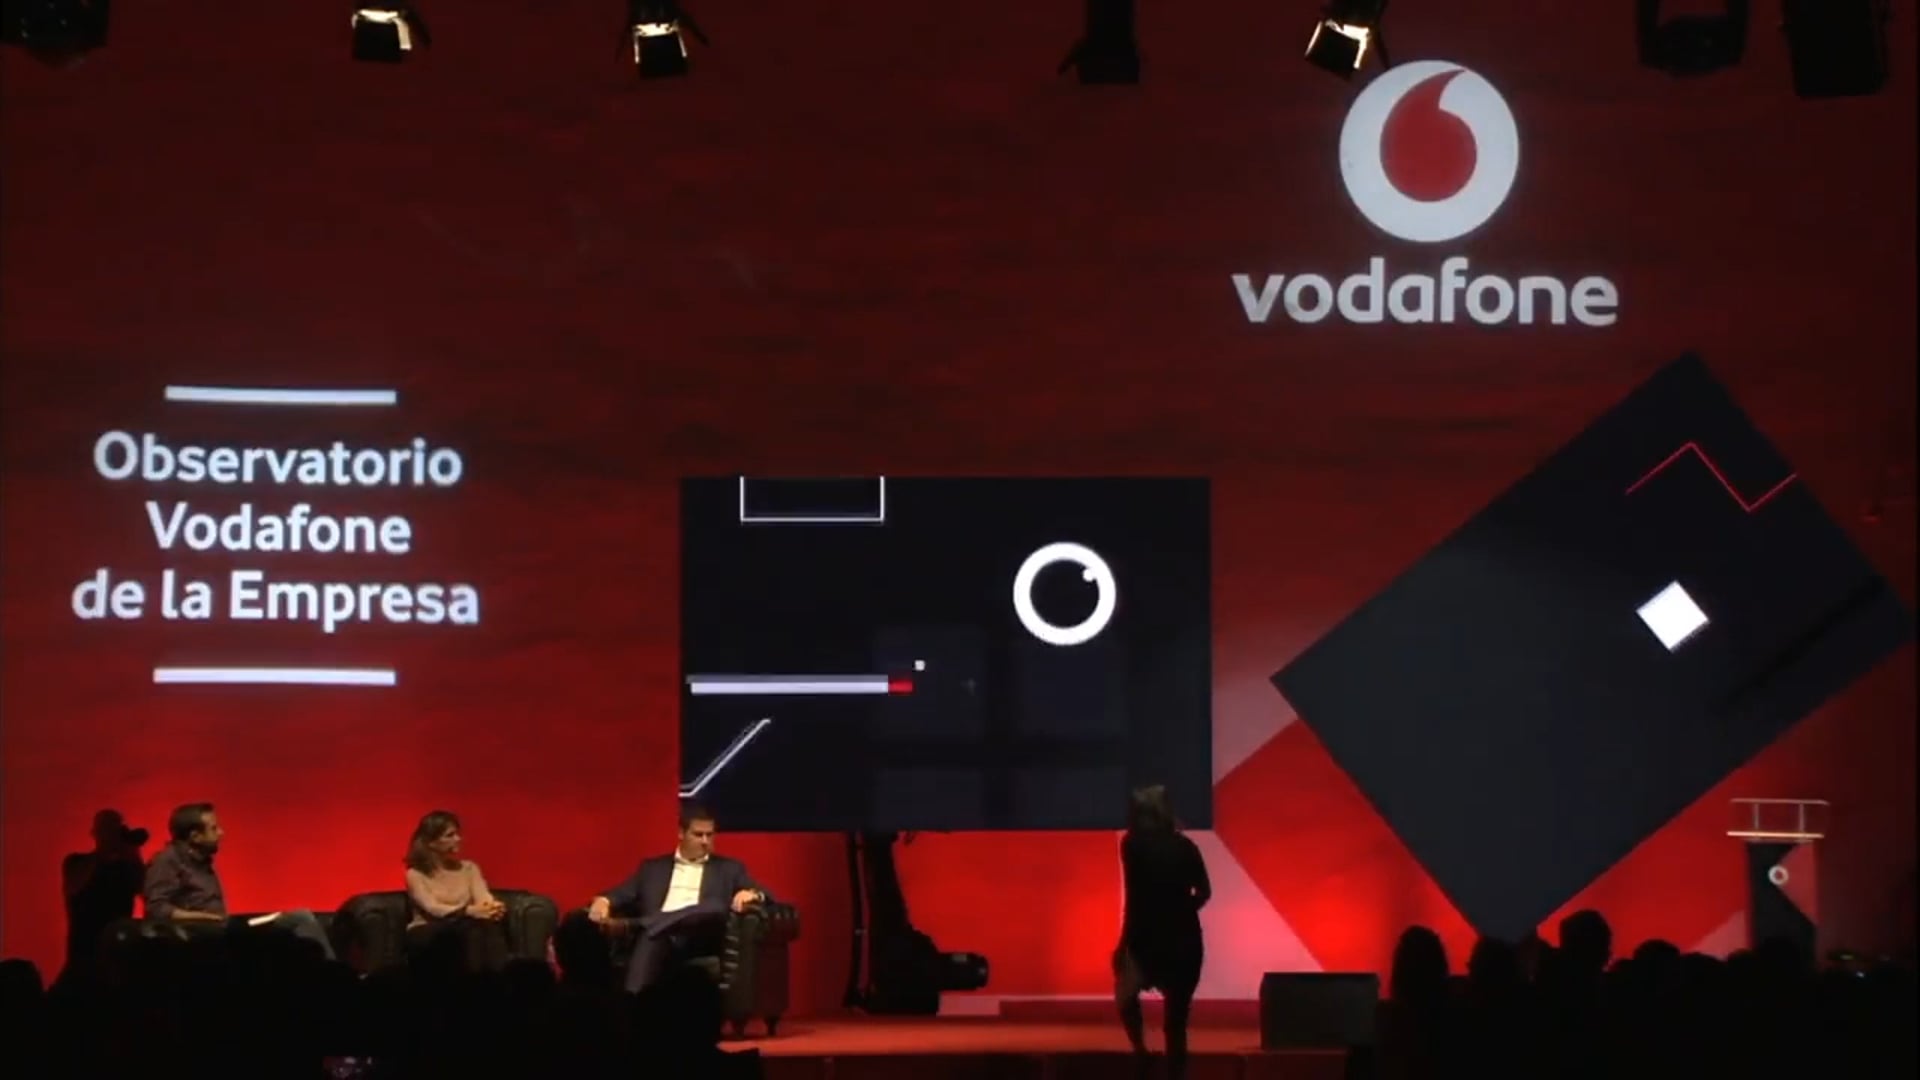 World Congress Vodafone_"Observatorio Vodafone de la Empresa"